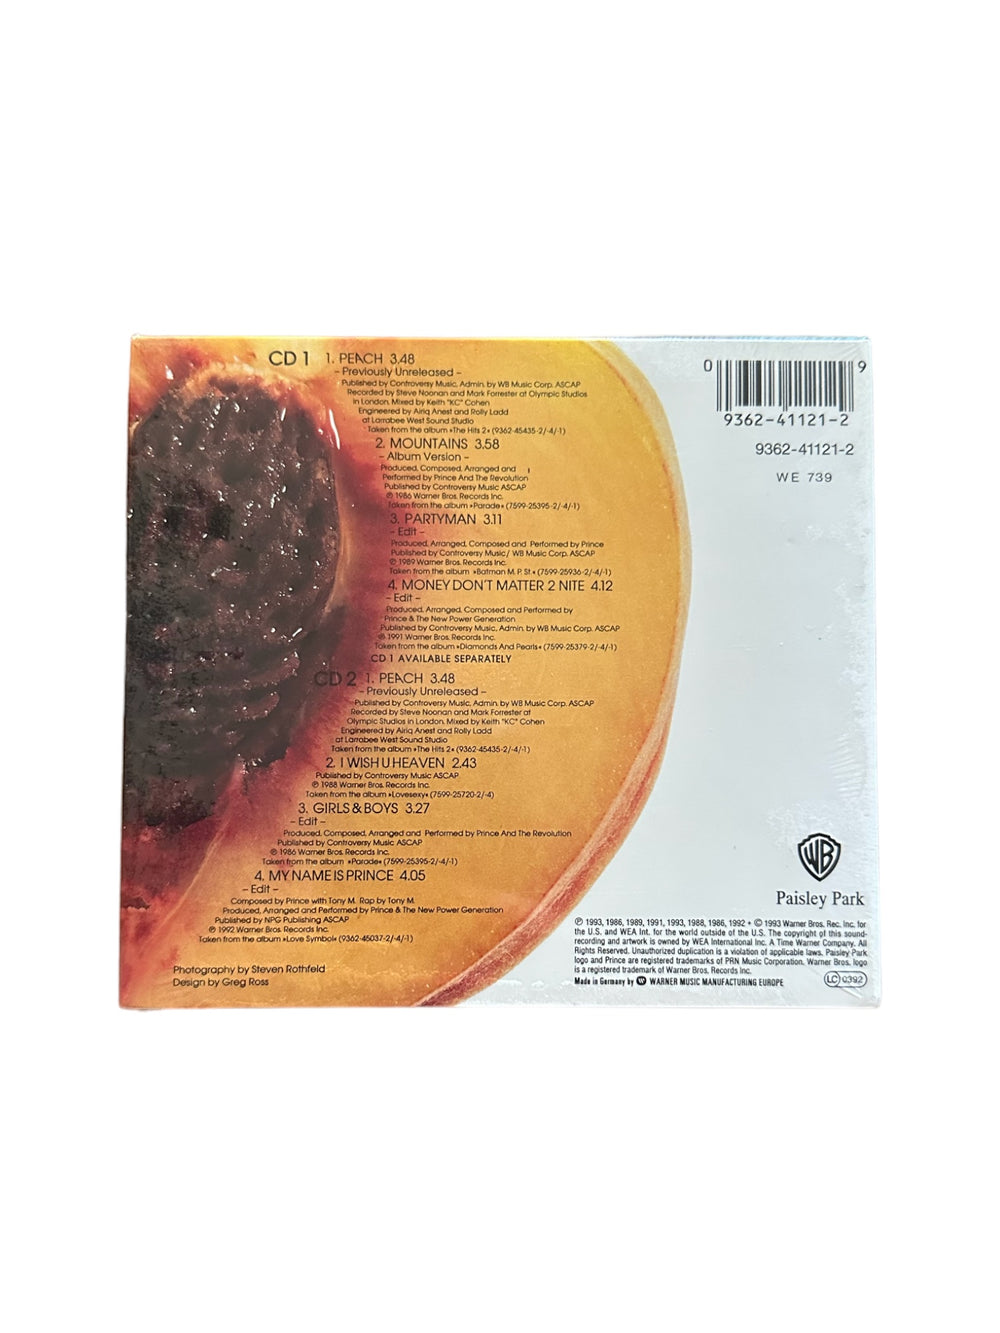 Prince – Peach CD Single European Digi Pak CD Sealed As NEW 1993